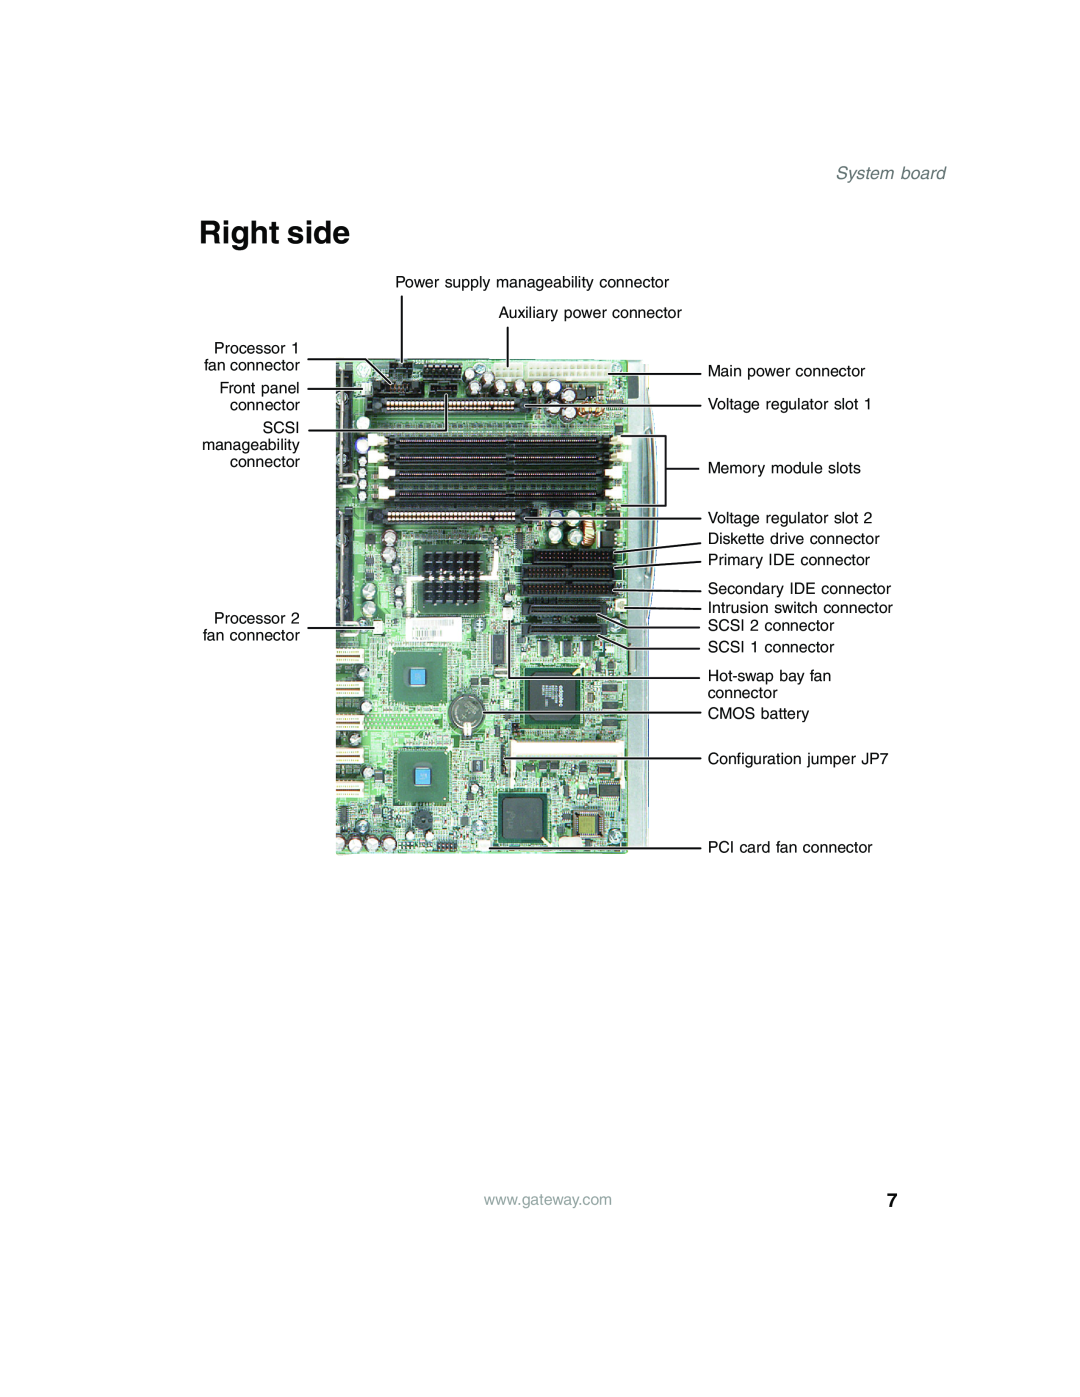 Gateway 980 manual Right side, System board 